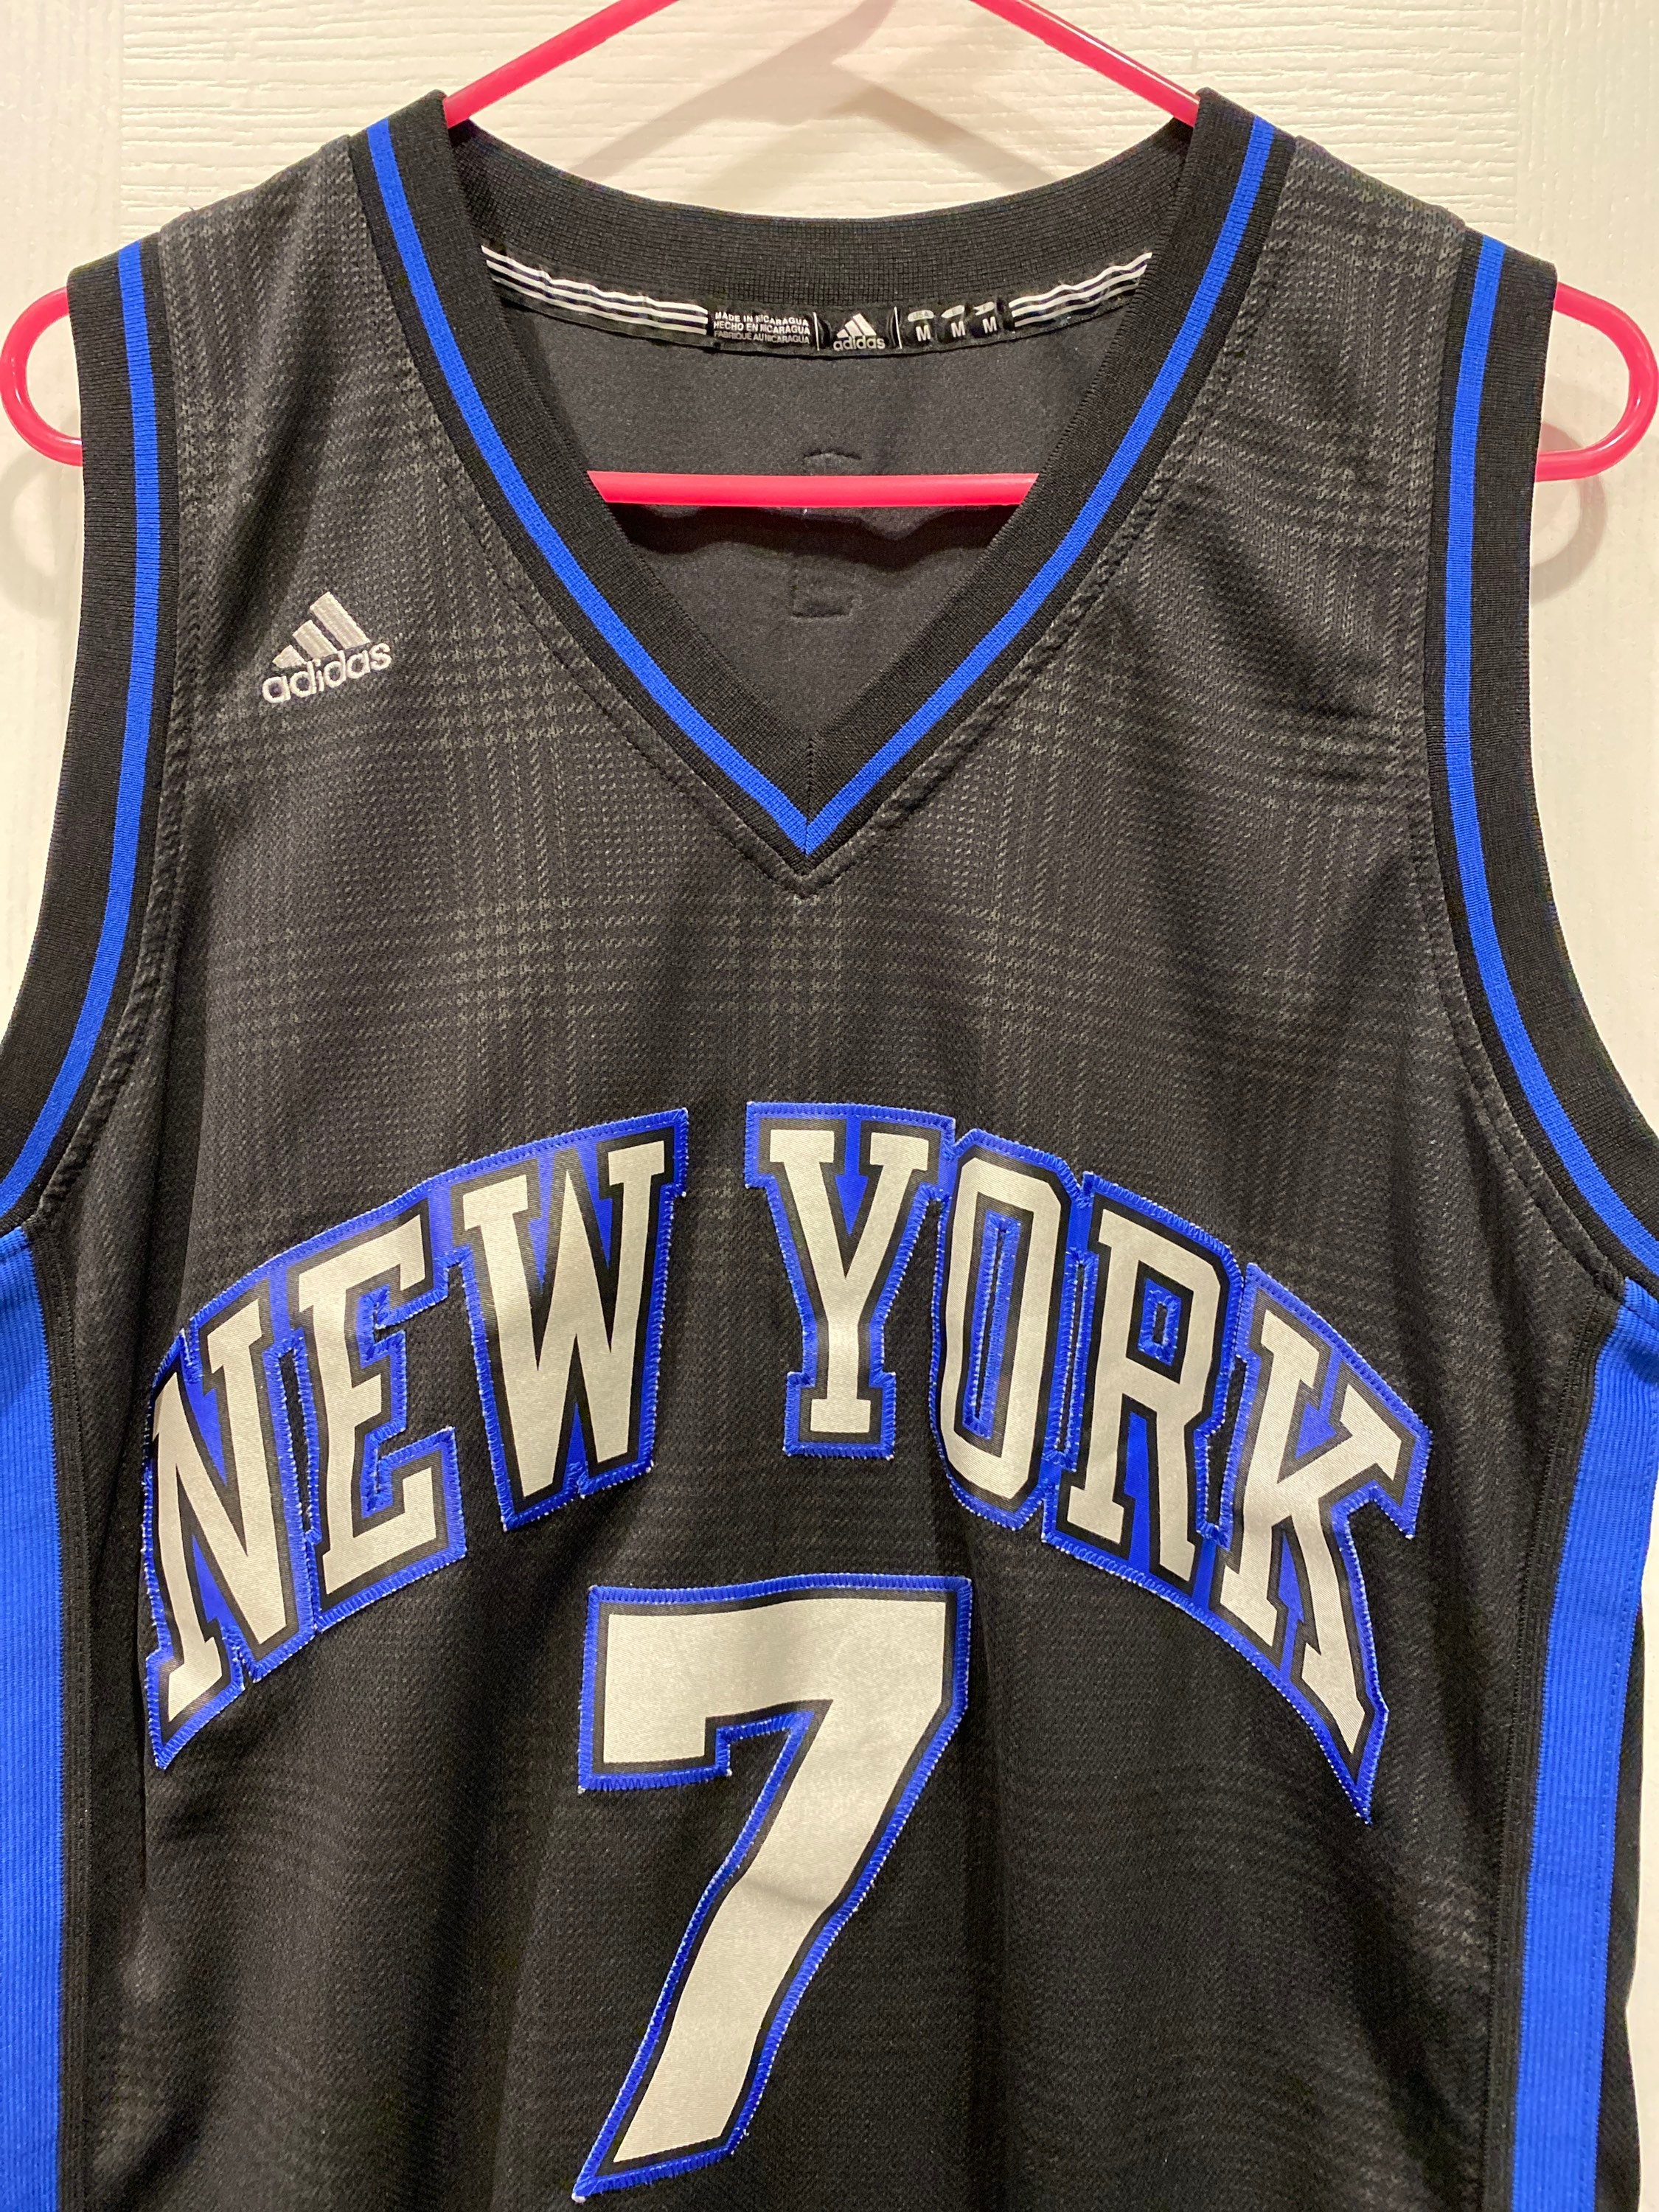 Adidas Denver Nuggets Carmelo Anthony Basketball Jersey Blue XXL